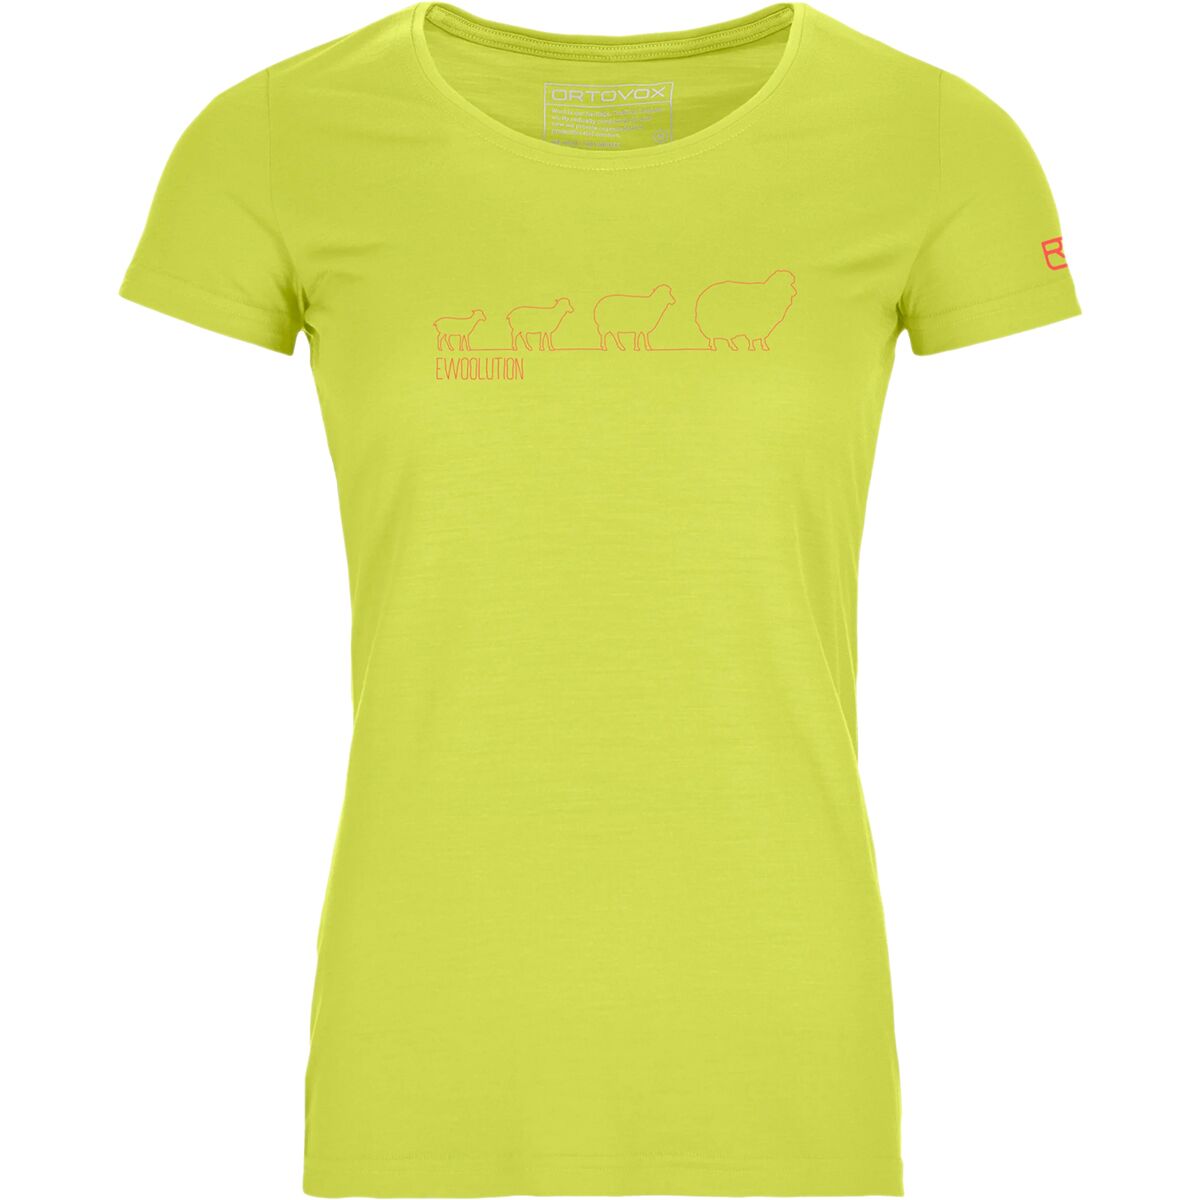 Ortovox 150 Cool Ewoolution T-Shirt - Women's